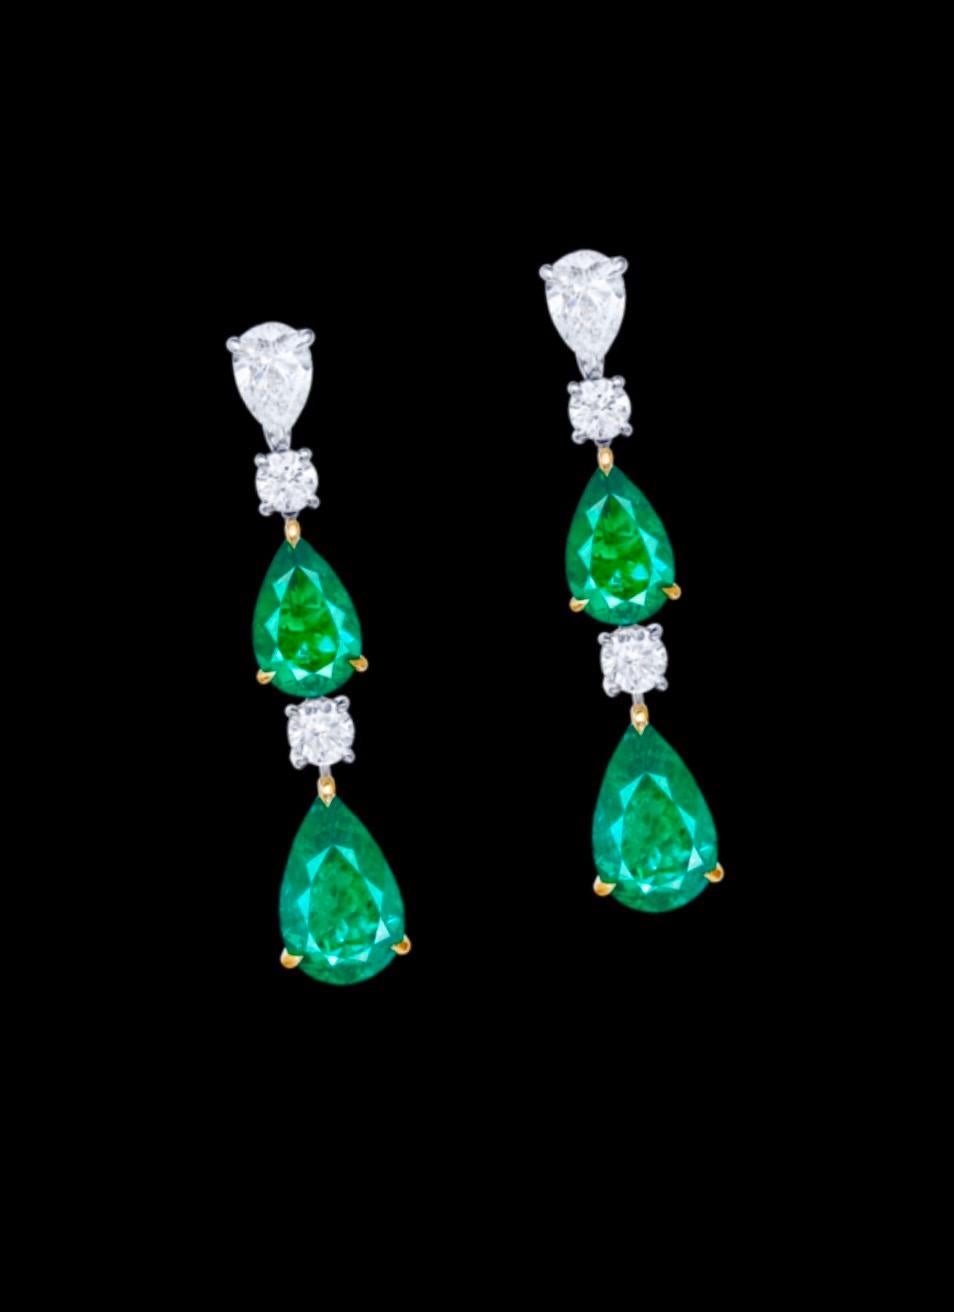 40 carat colombian emerald